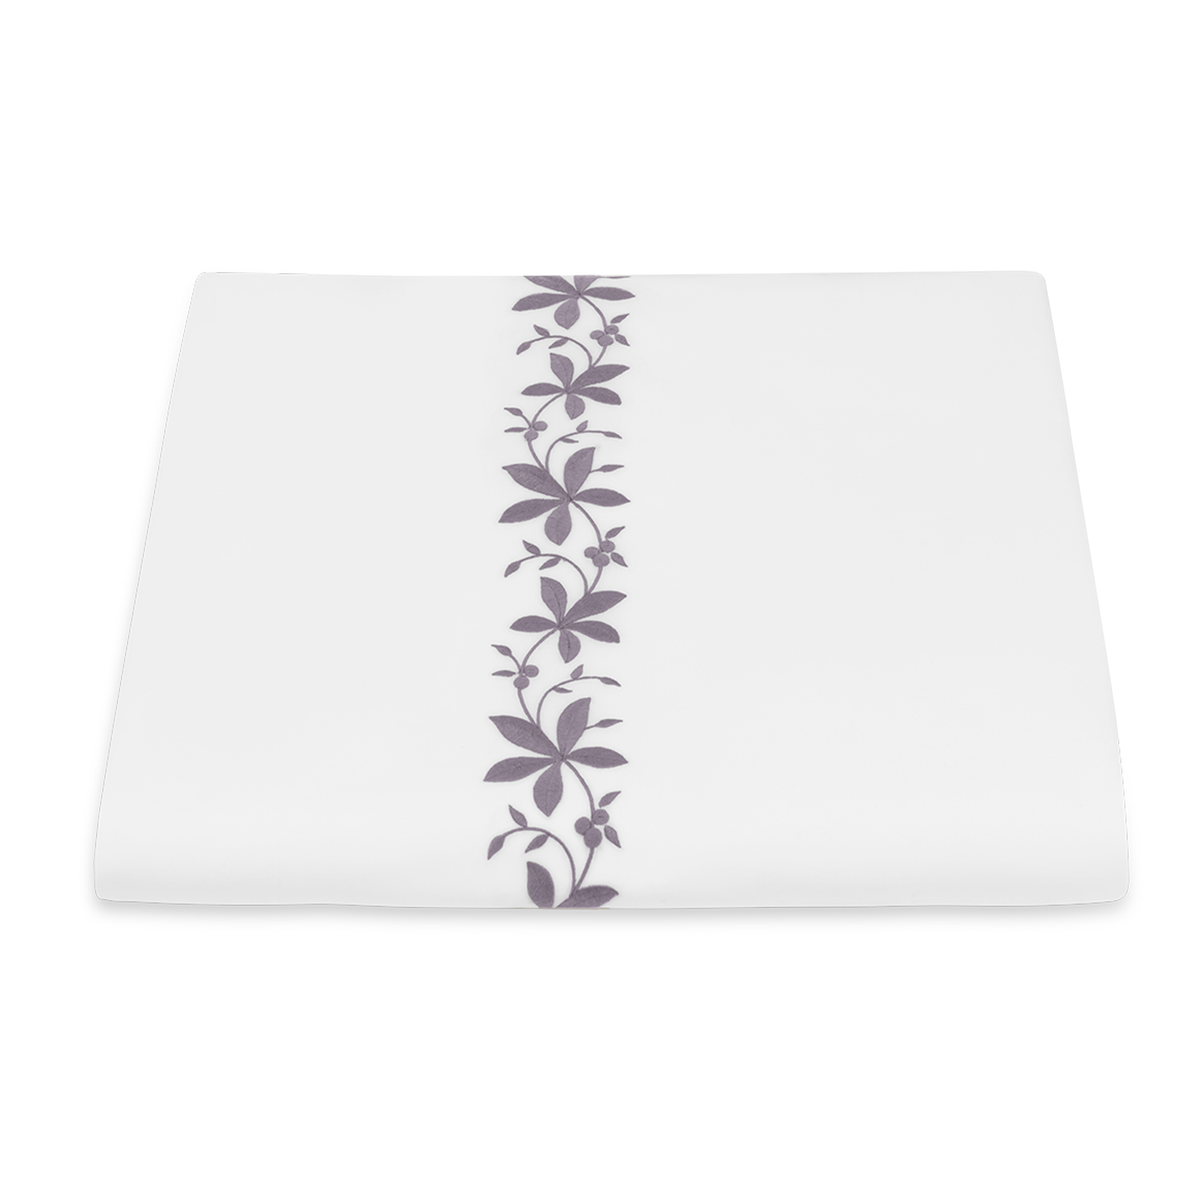 Folded Duvet Cover of Matouk Callista Bedding in Lilac Color